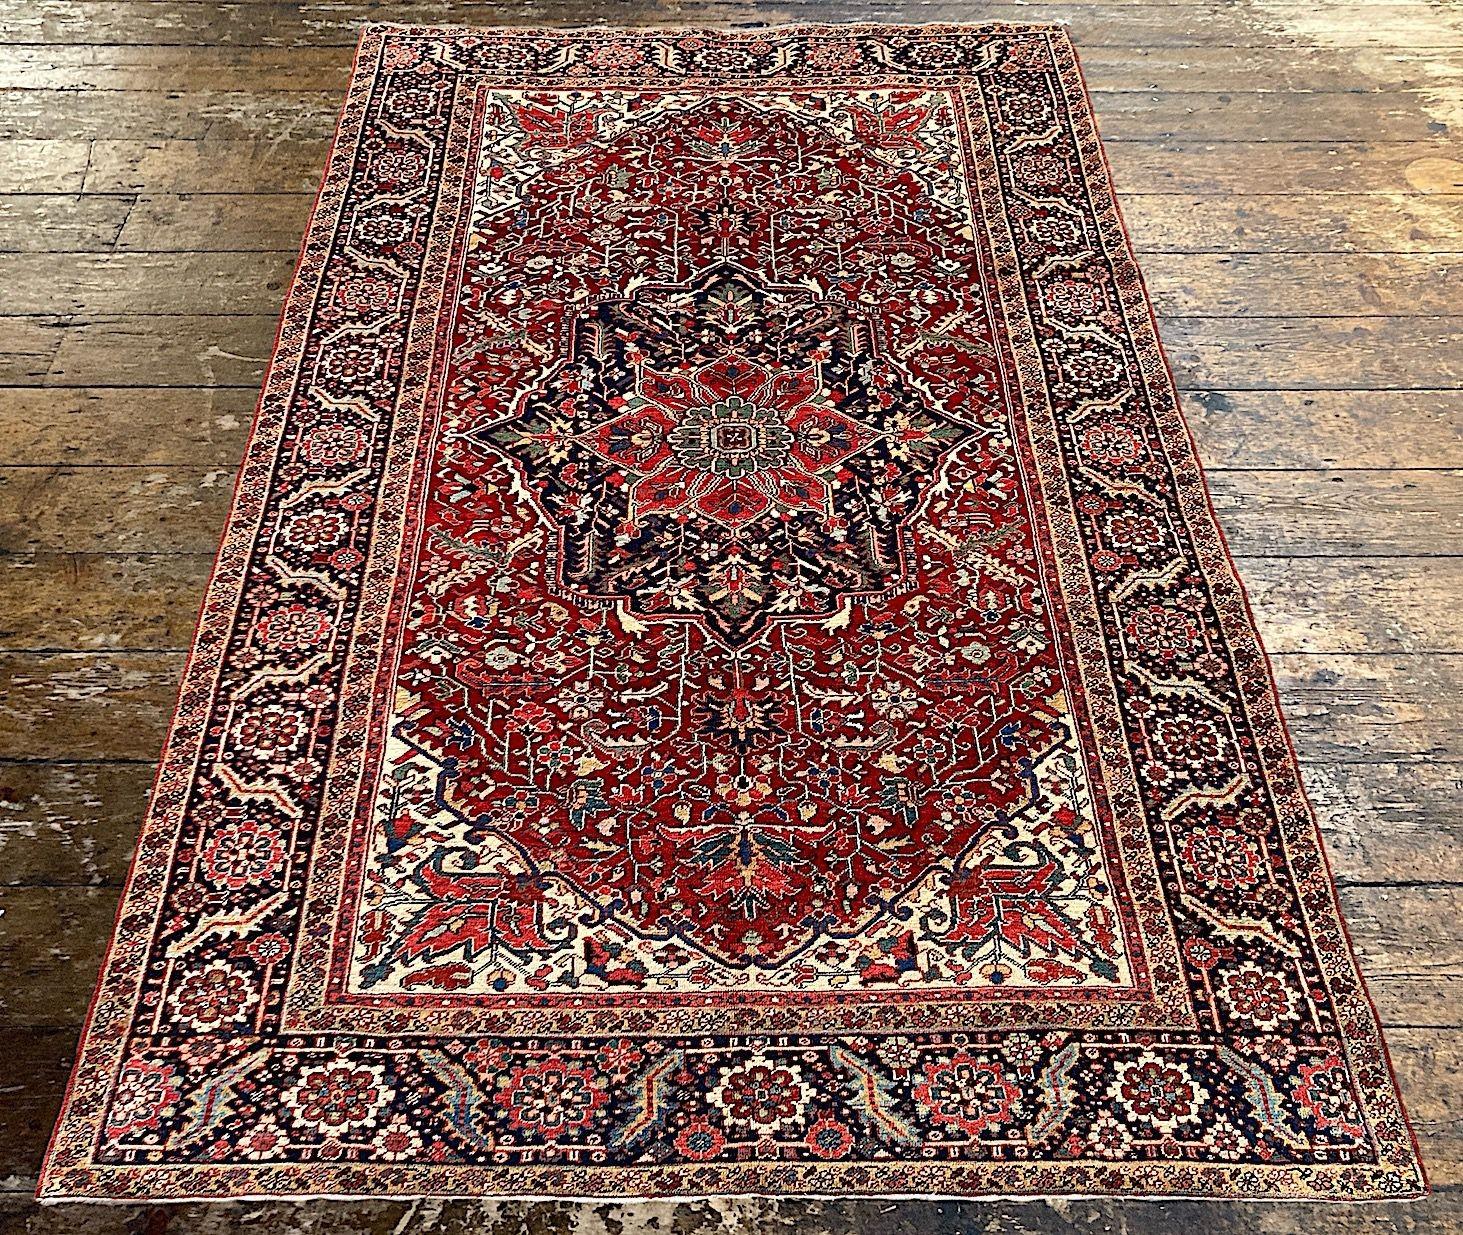 Early 20th Century Antique Heriz Carpet 3.58m x 2.27m For Sale